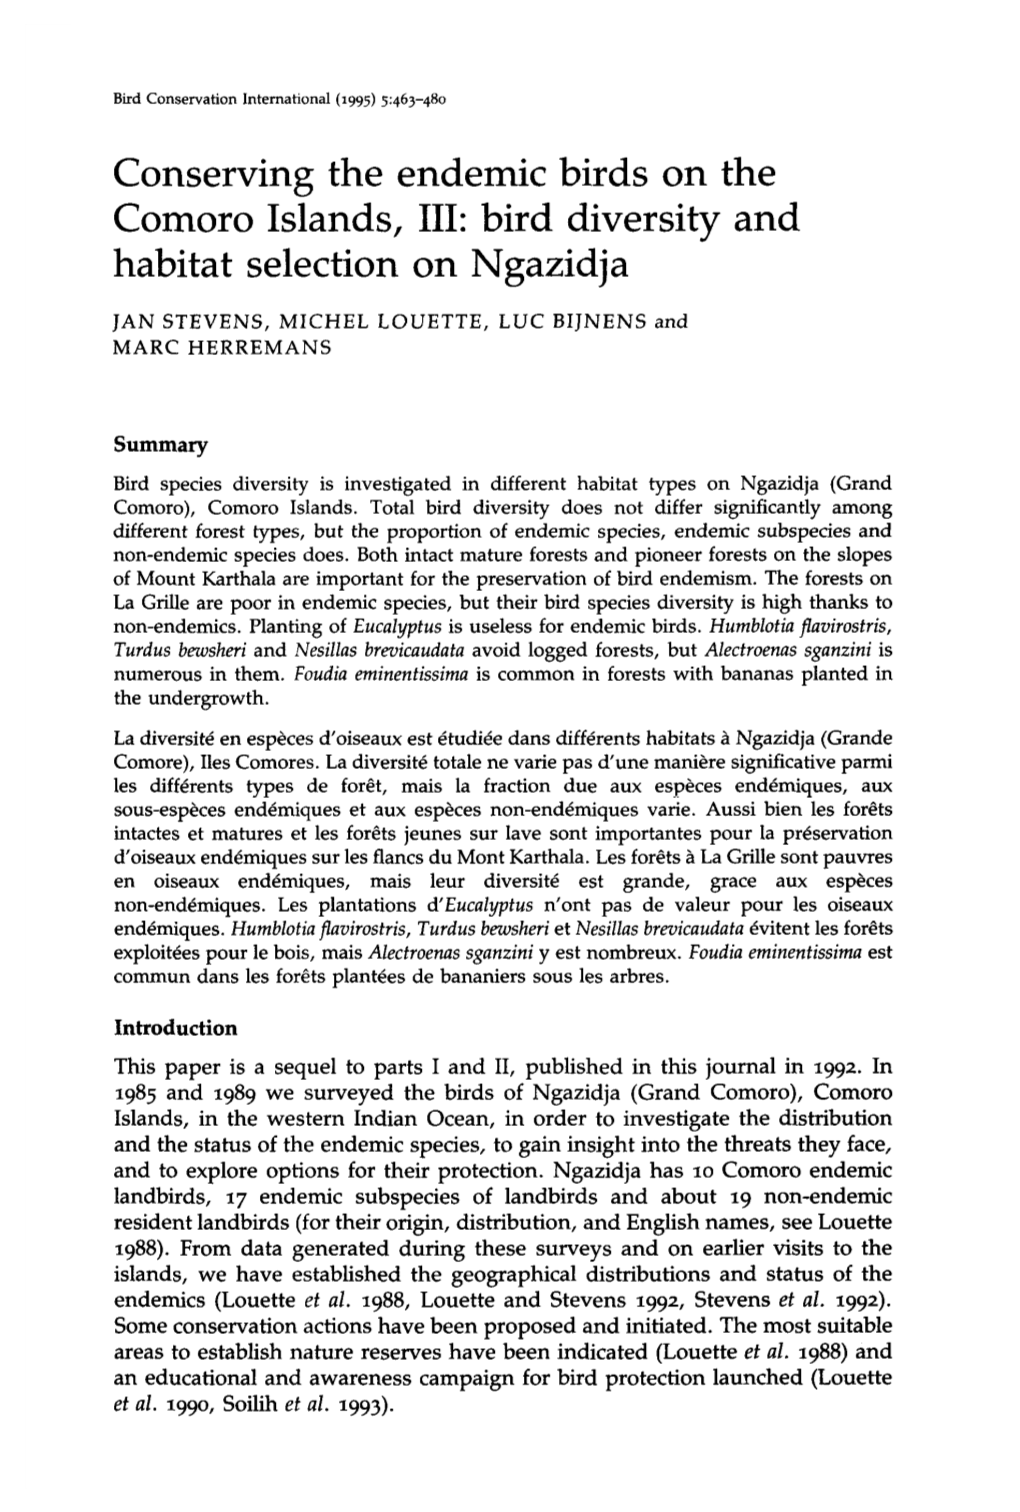 Conserving the Endemic Birds on the Comoro Islands, III: Bird Diversity and Habitat Selection on Ngazidja